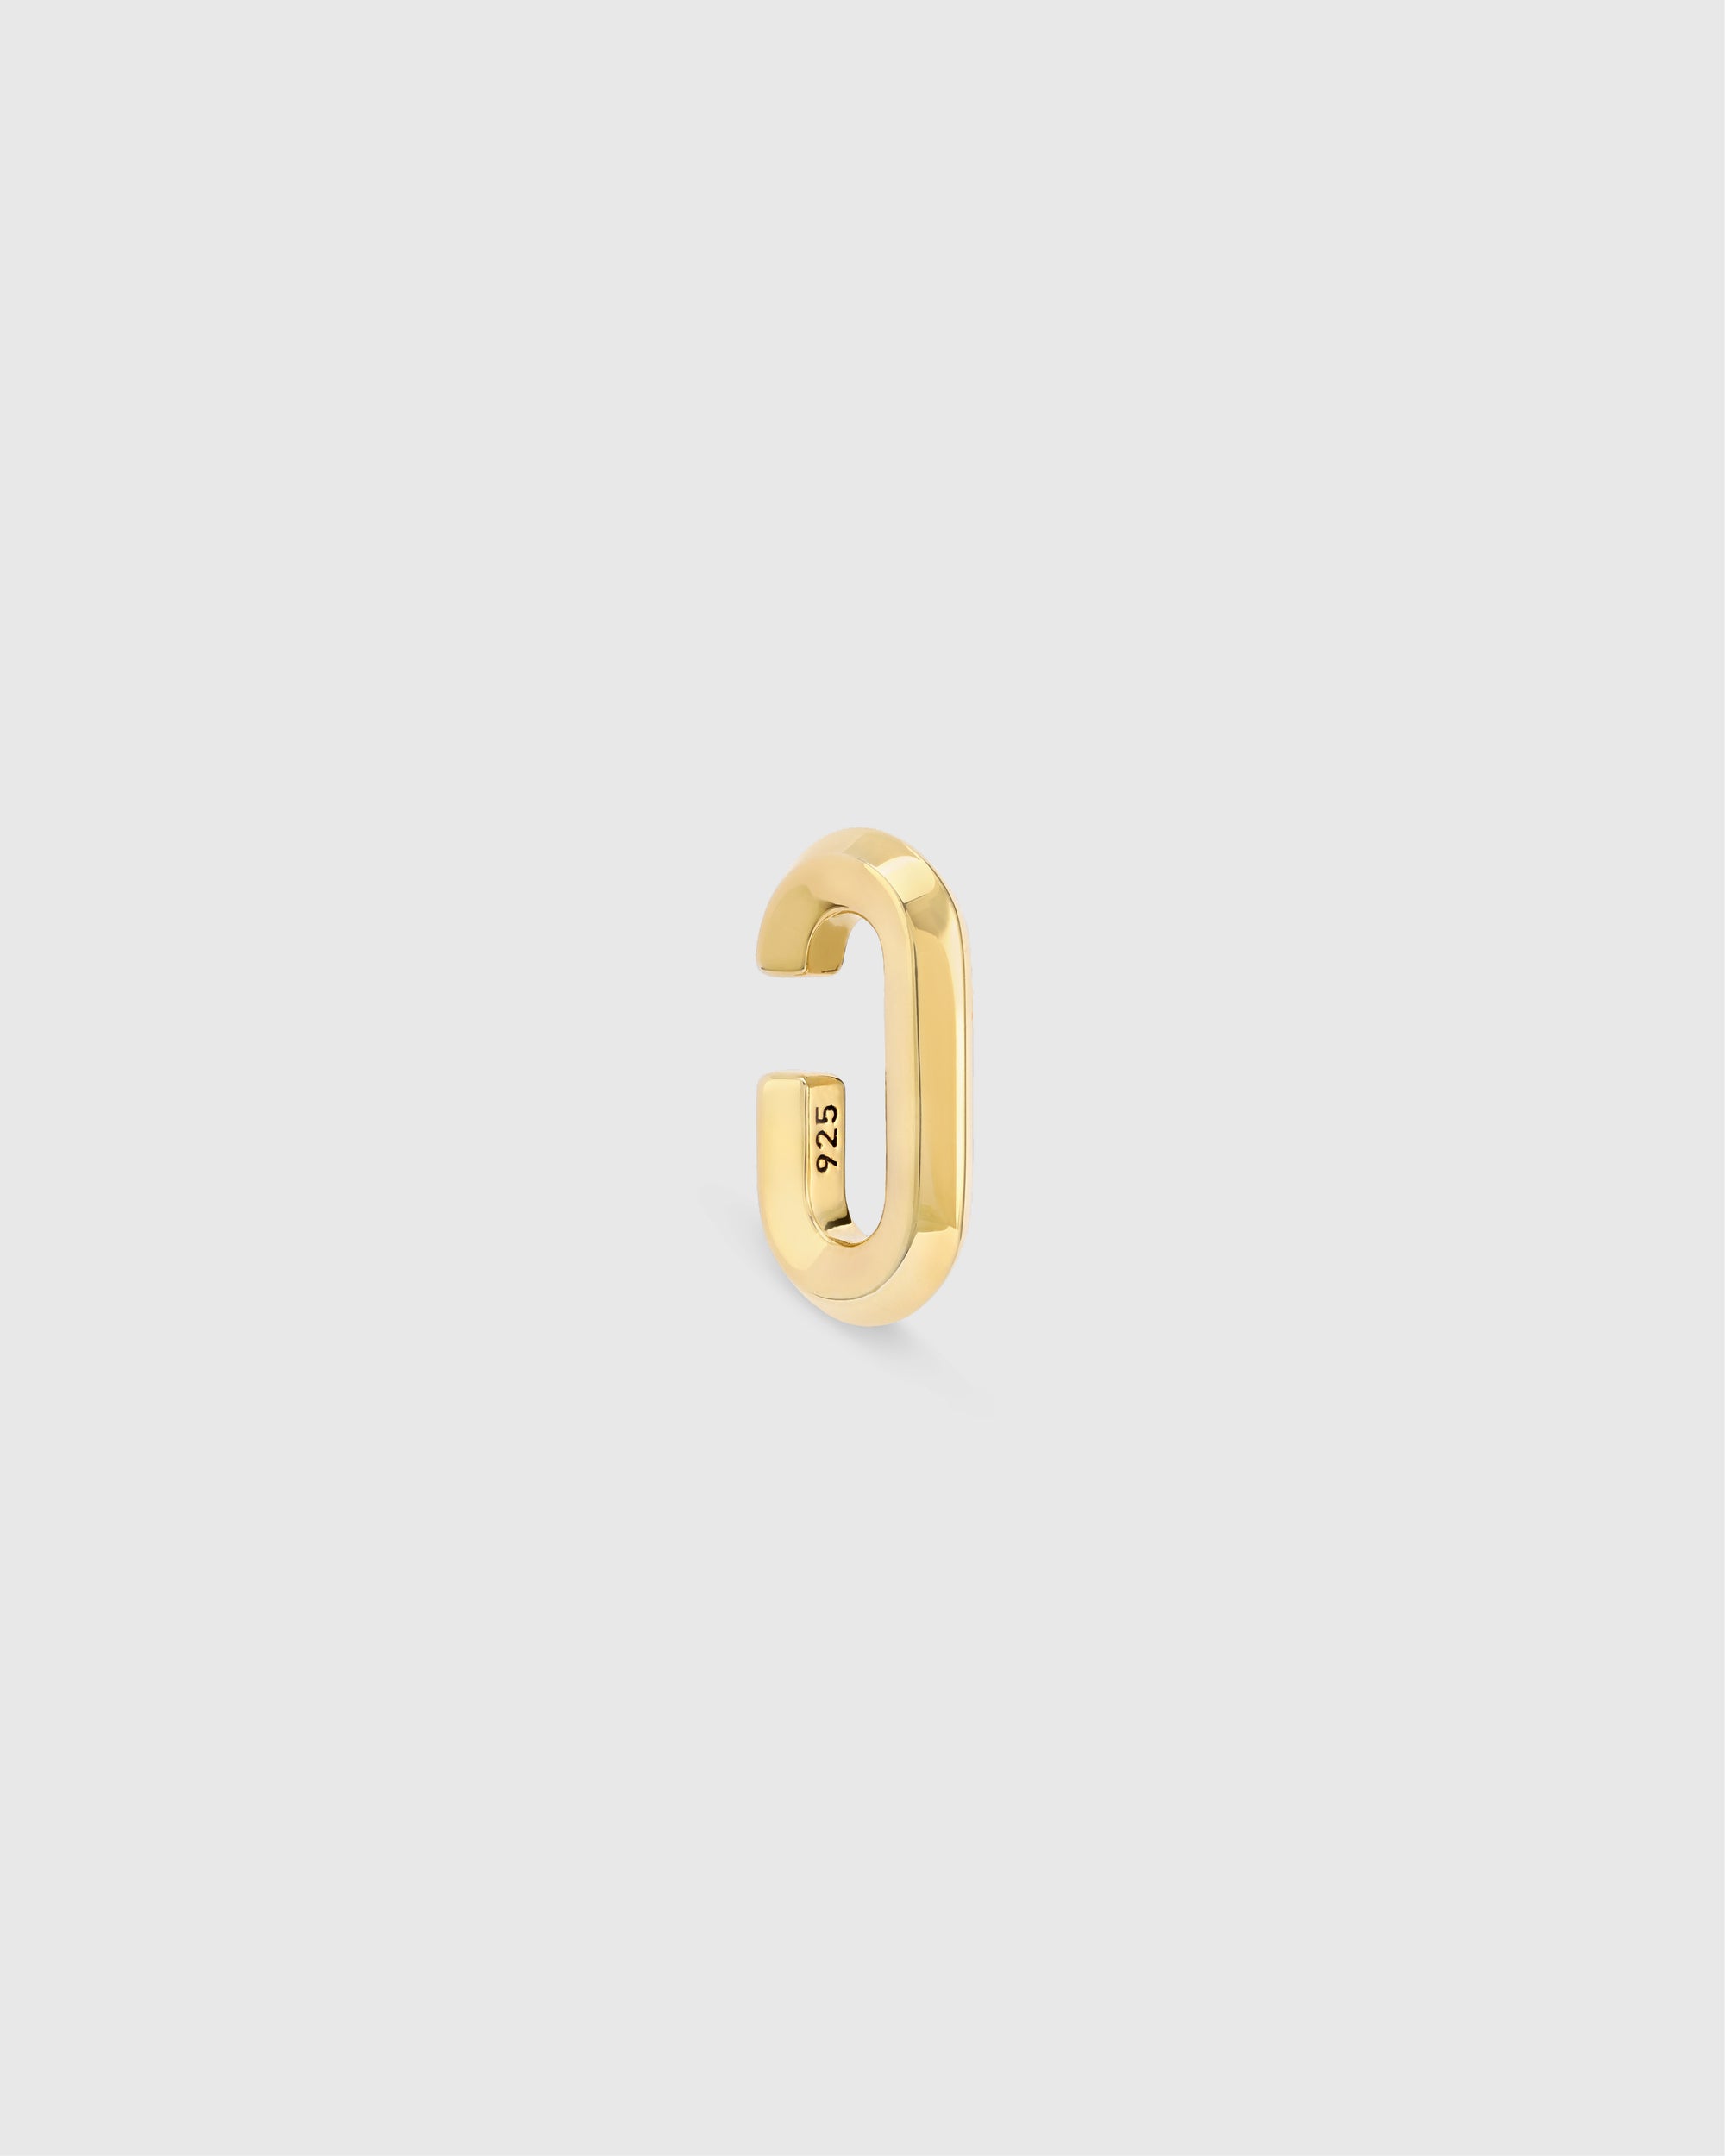 Penta Capsule ear cuff in 18K yellow gold vermeil